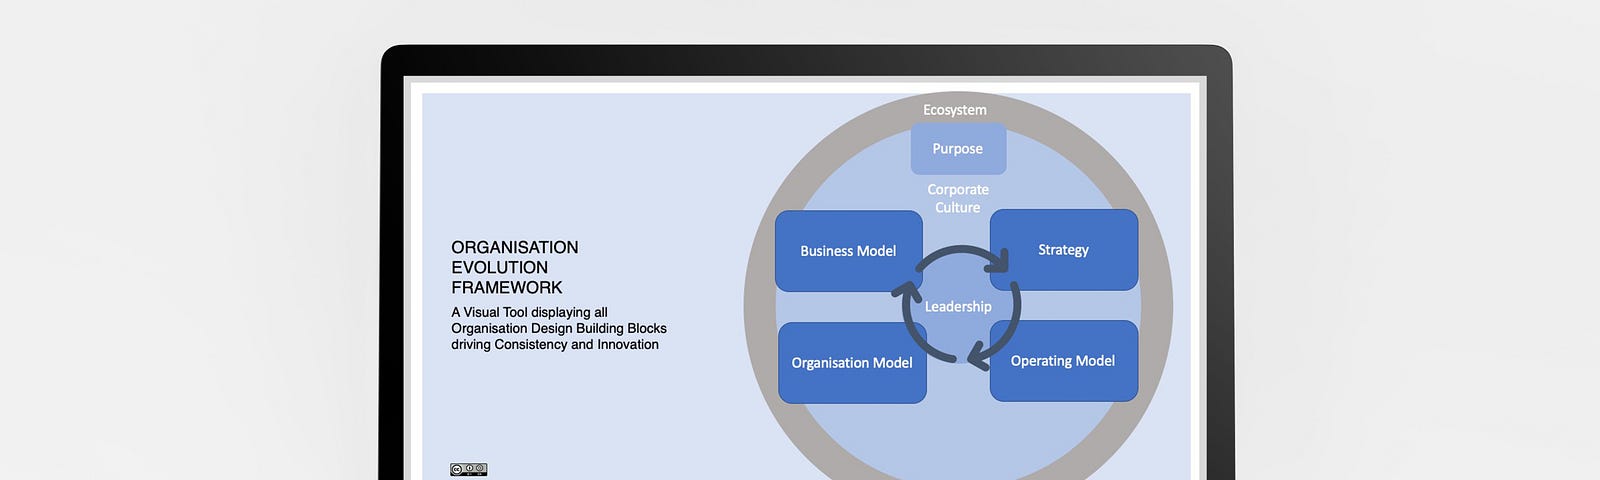 Introducing the Organisation Evolution Framework